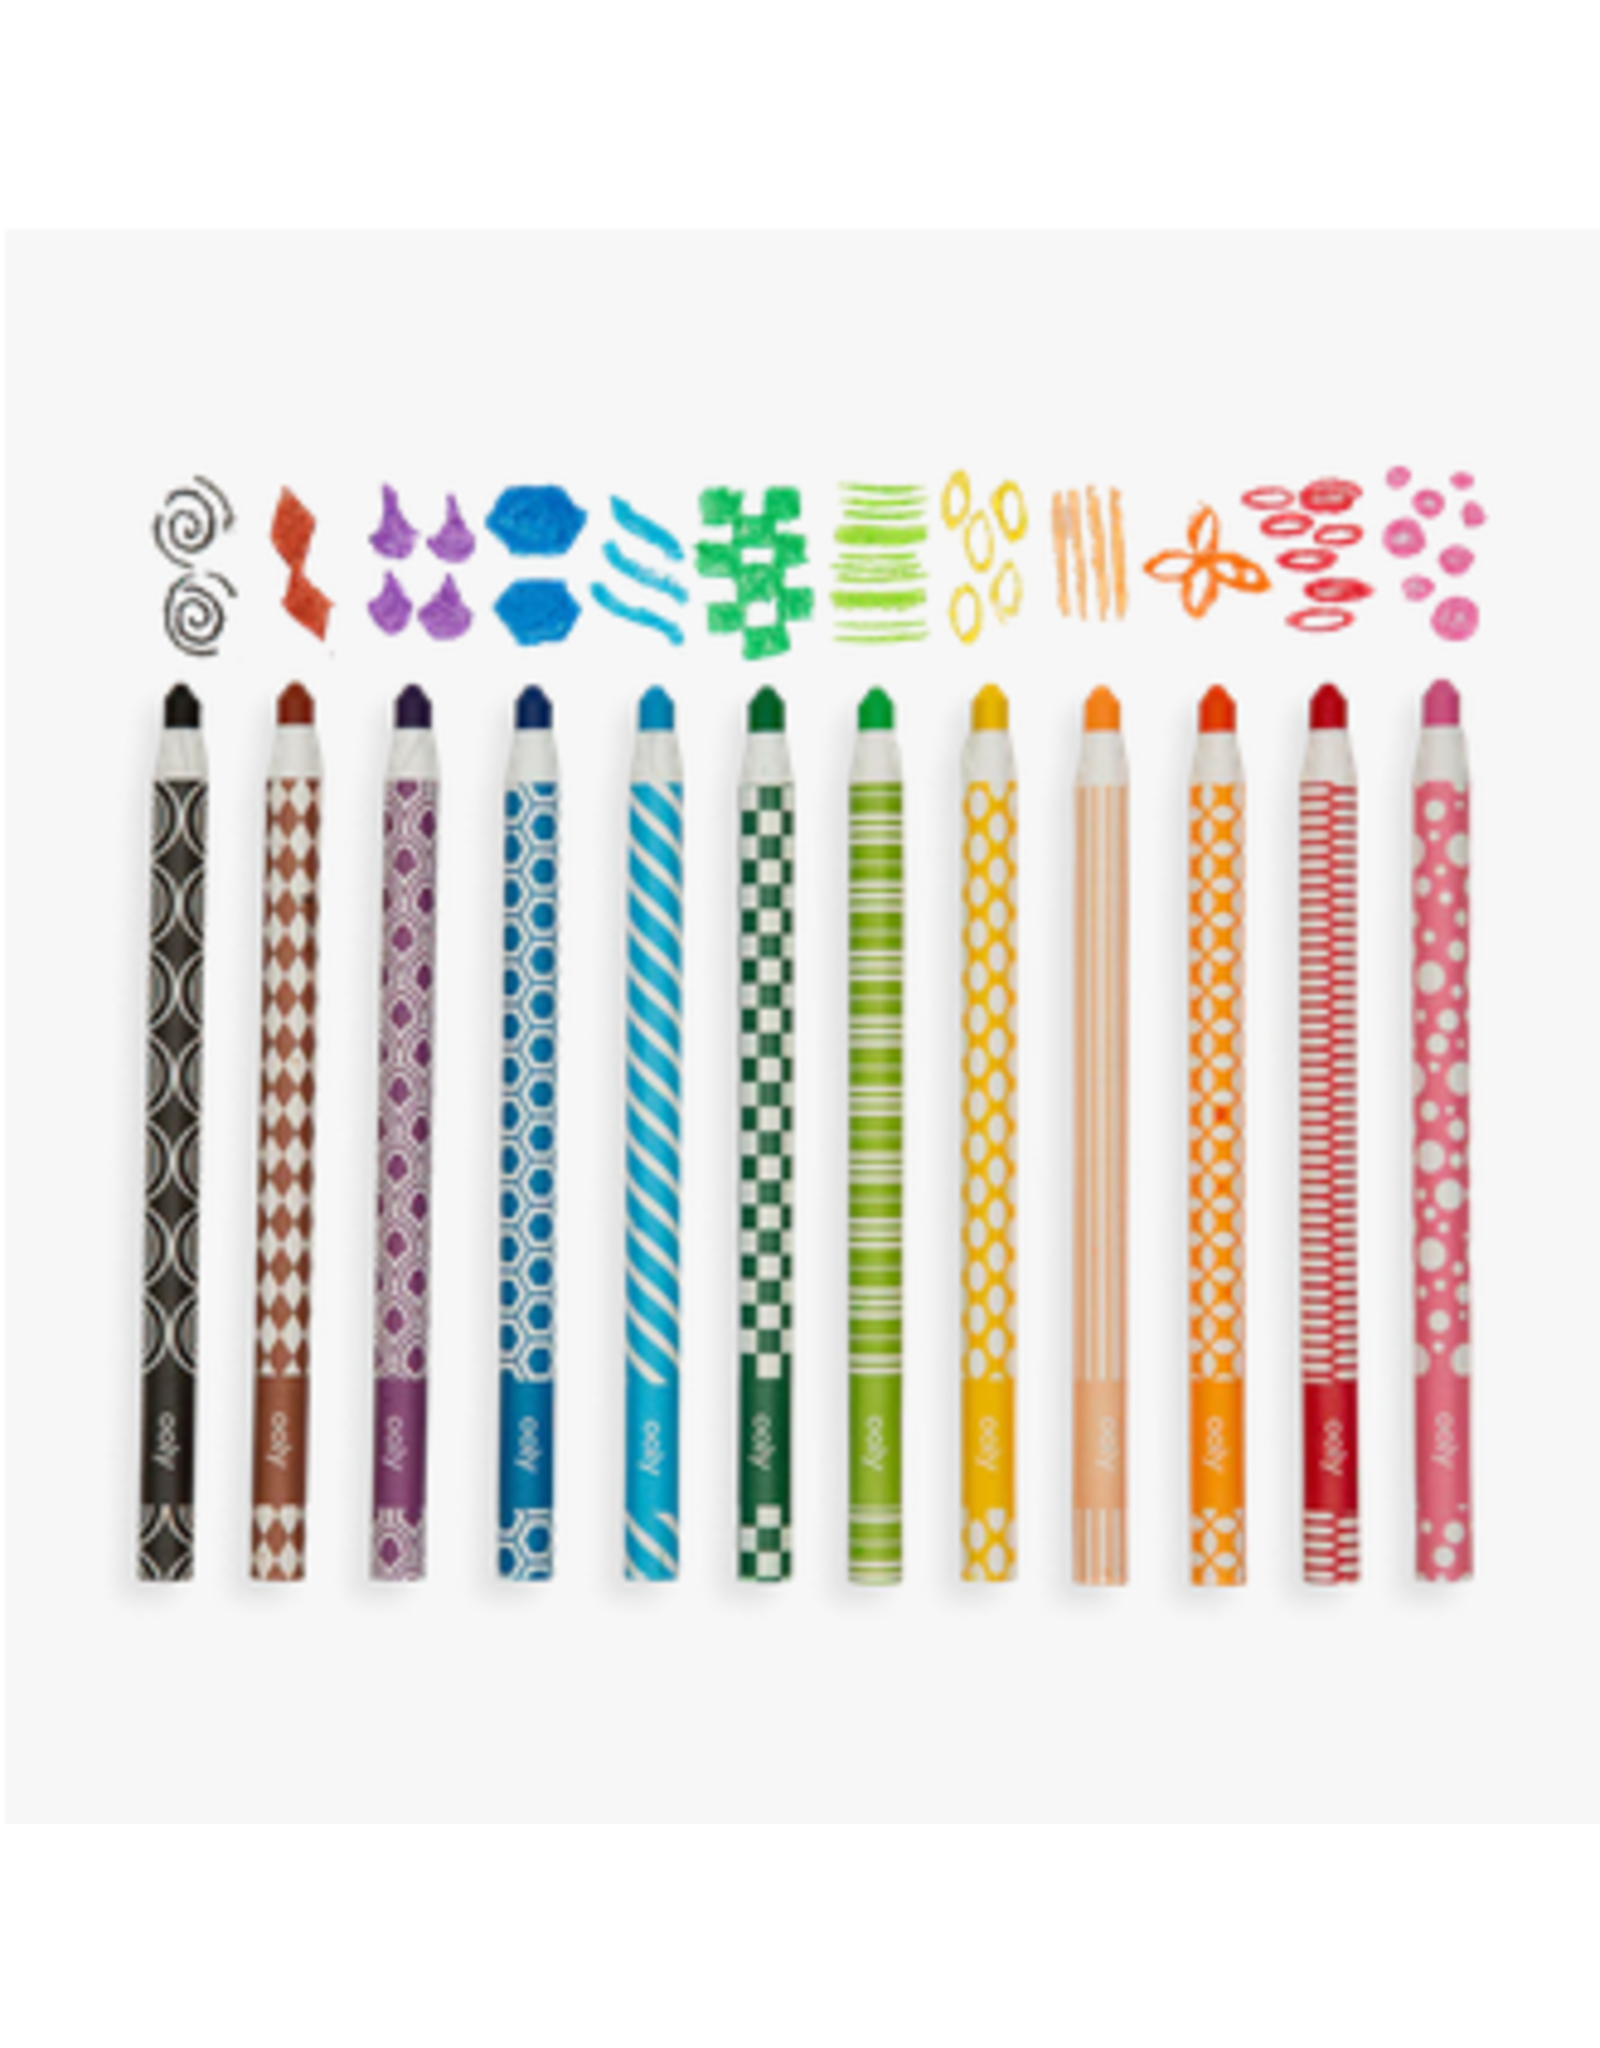 ooly Ooly Color Appeel Crayons 12